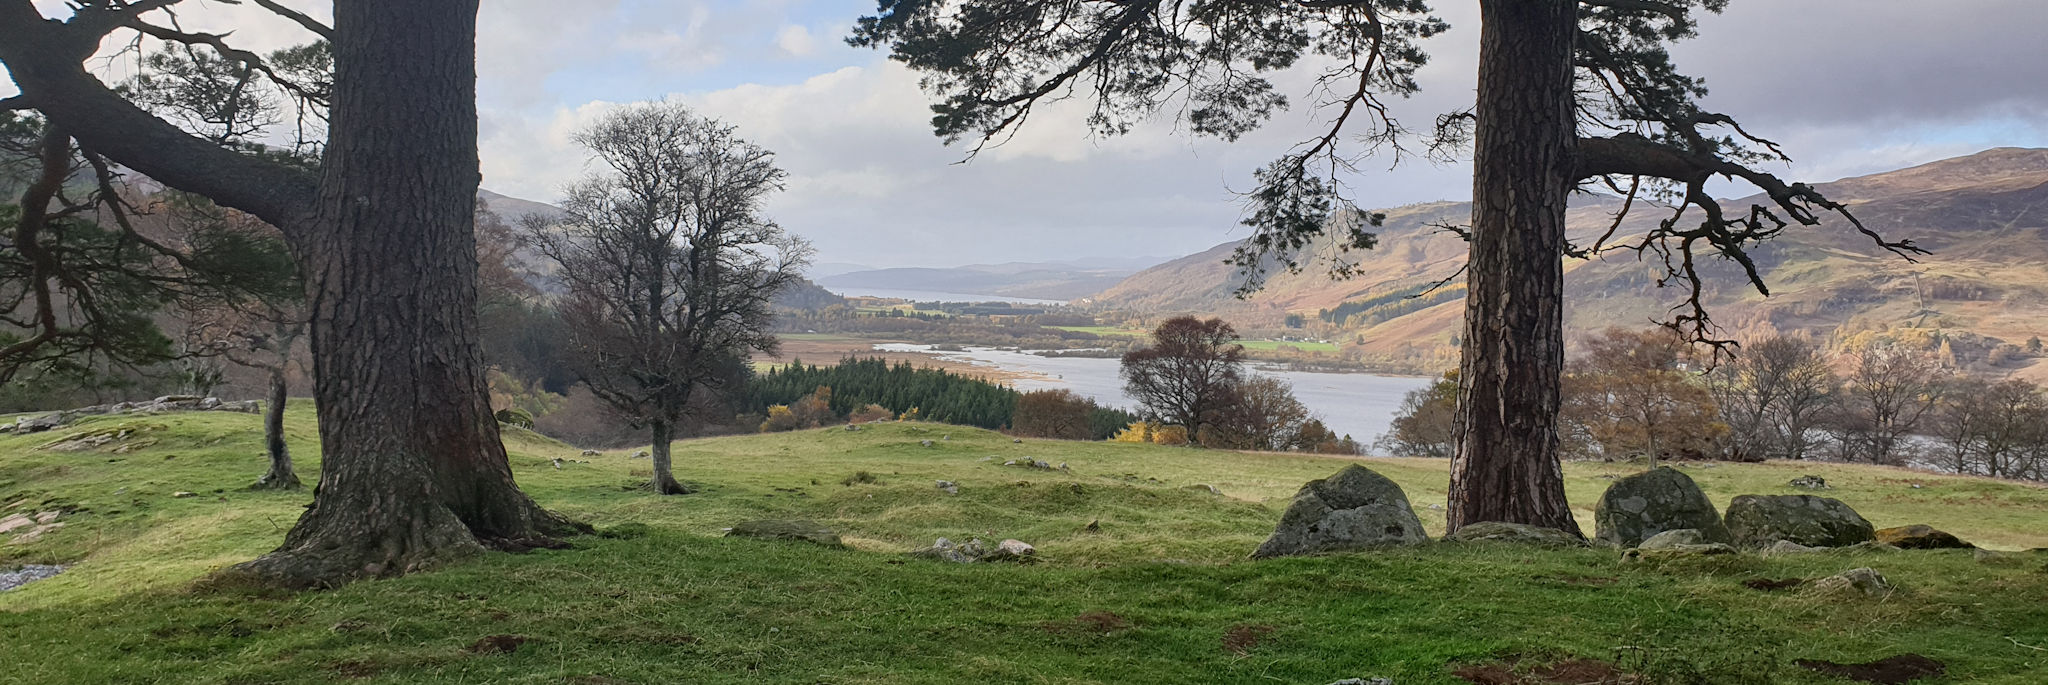 Outlander filming locations in Scotland